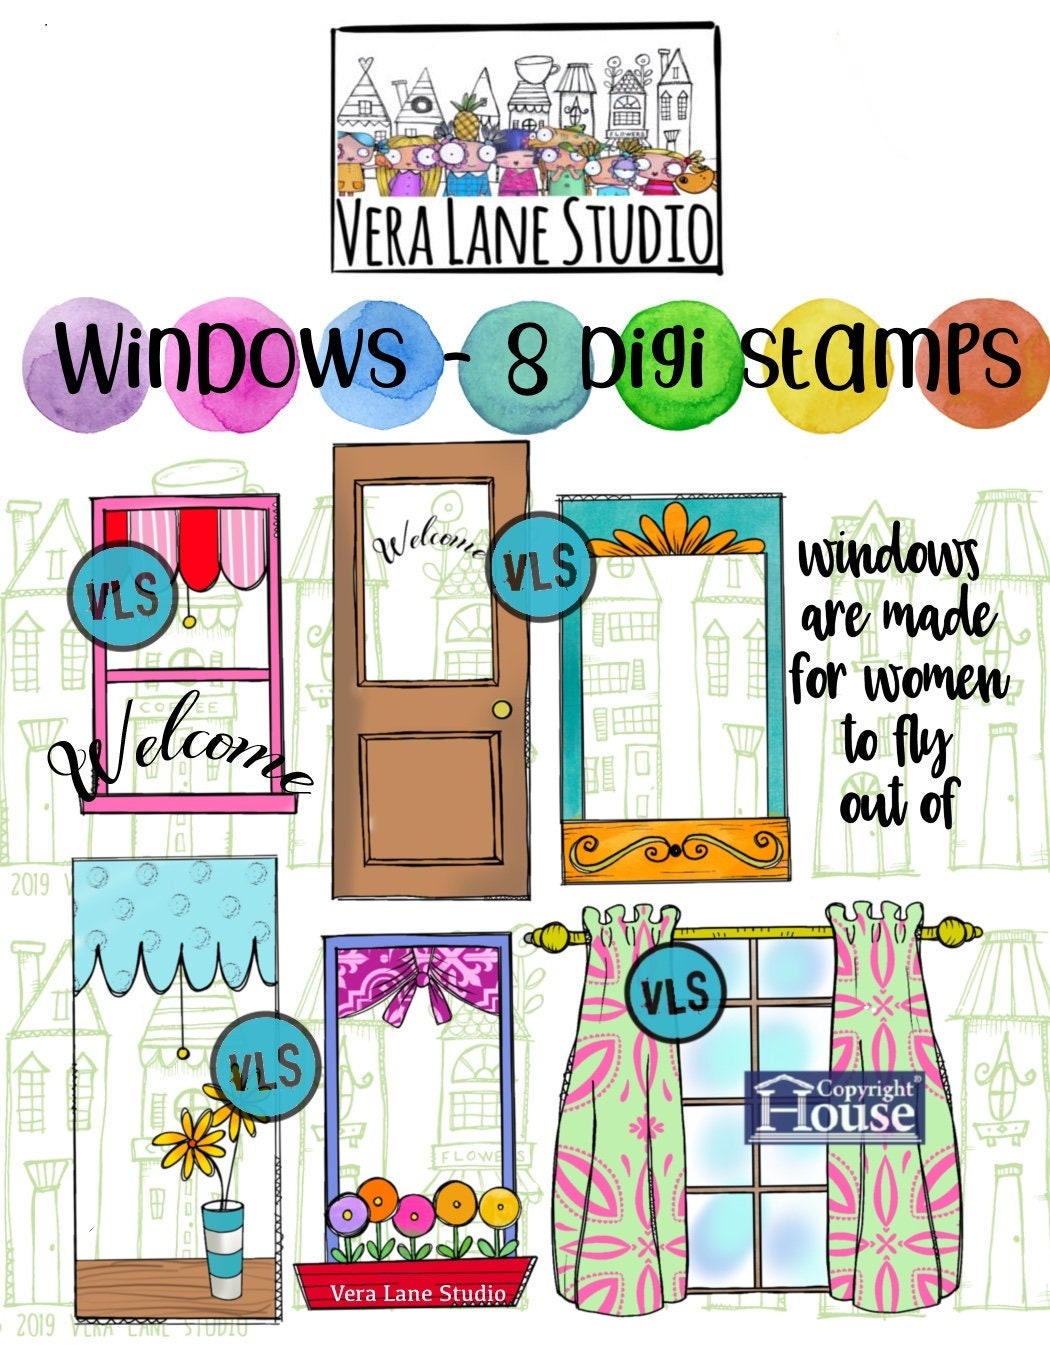 Windows - 8 digi stamps